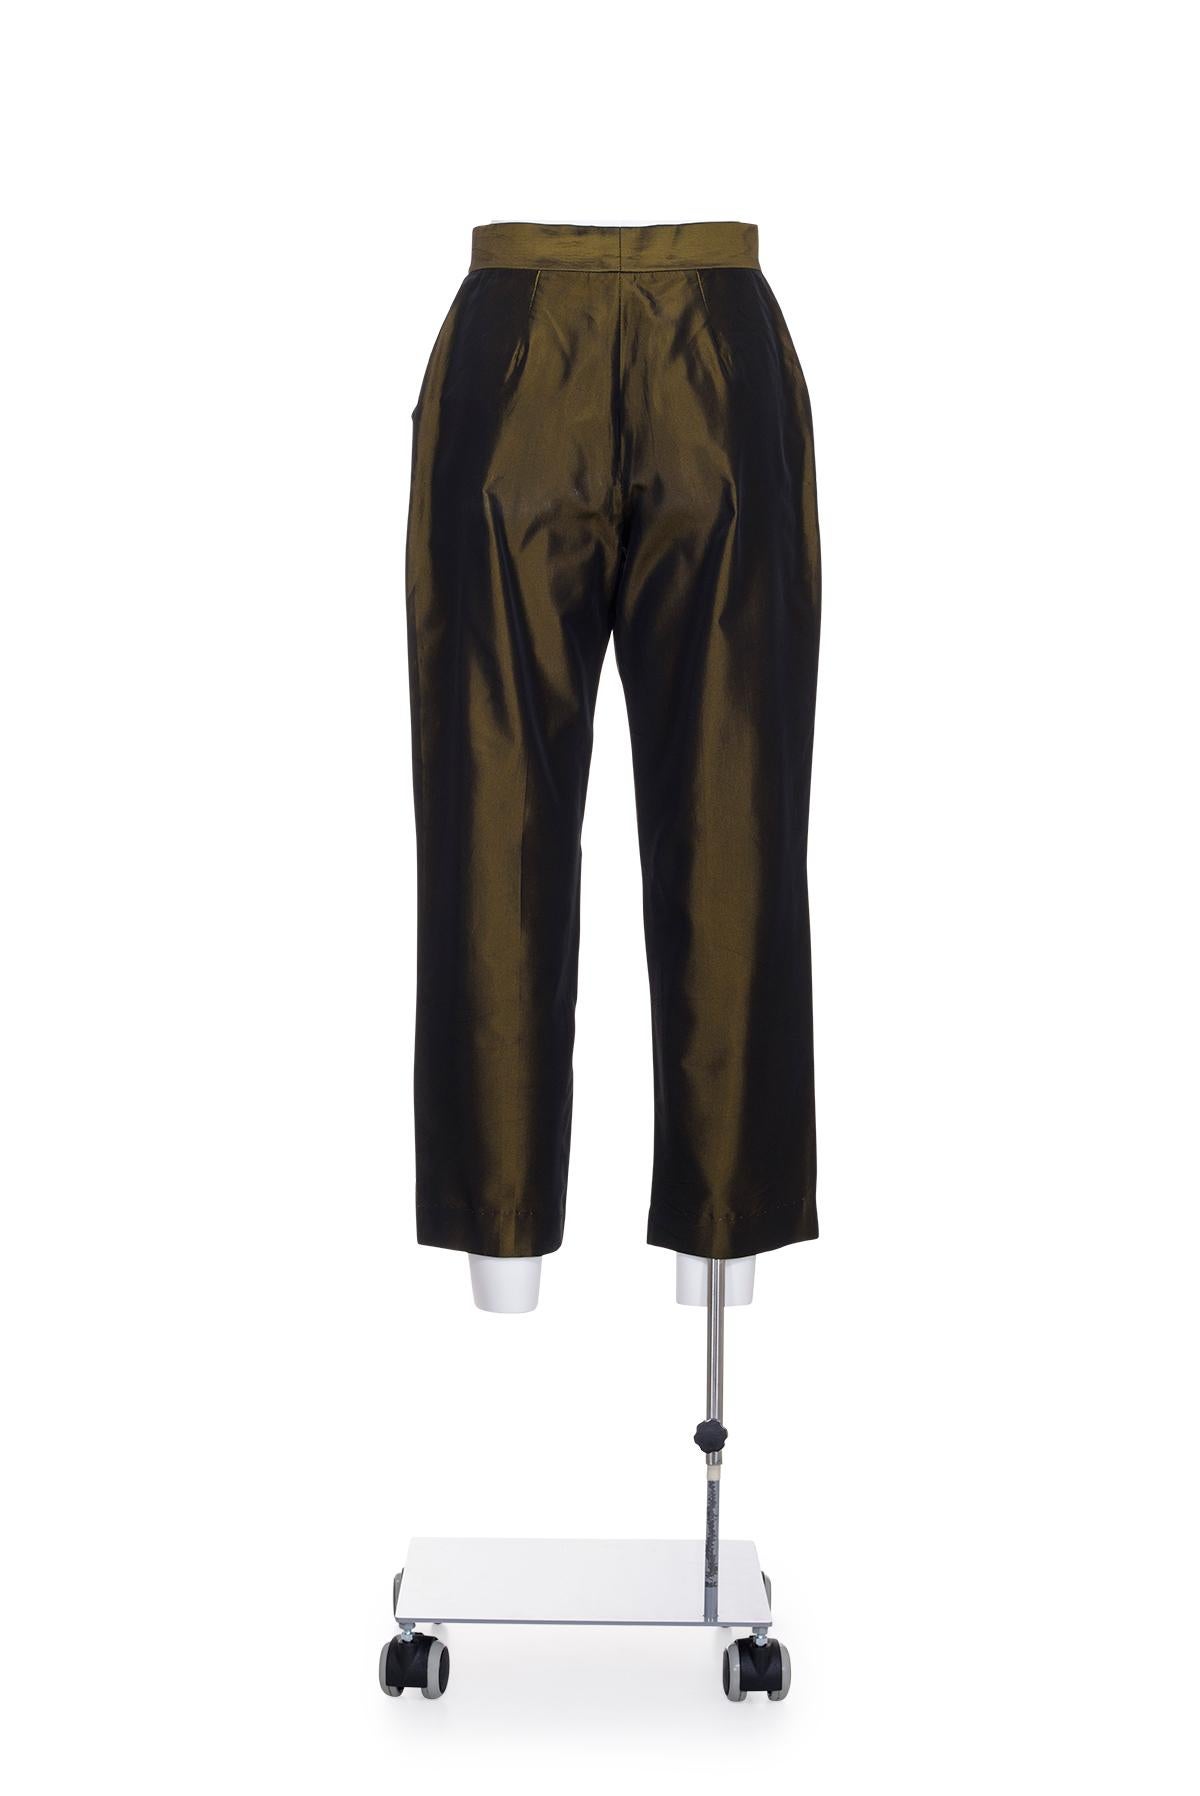 ALEXANDER MCQUEEN SS 97 Iridescent Taffeta Suit For Sale 6